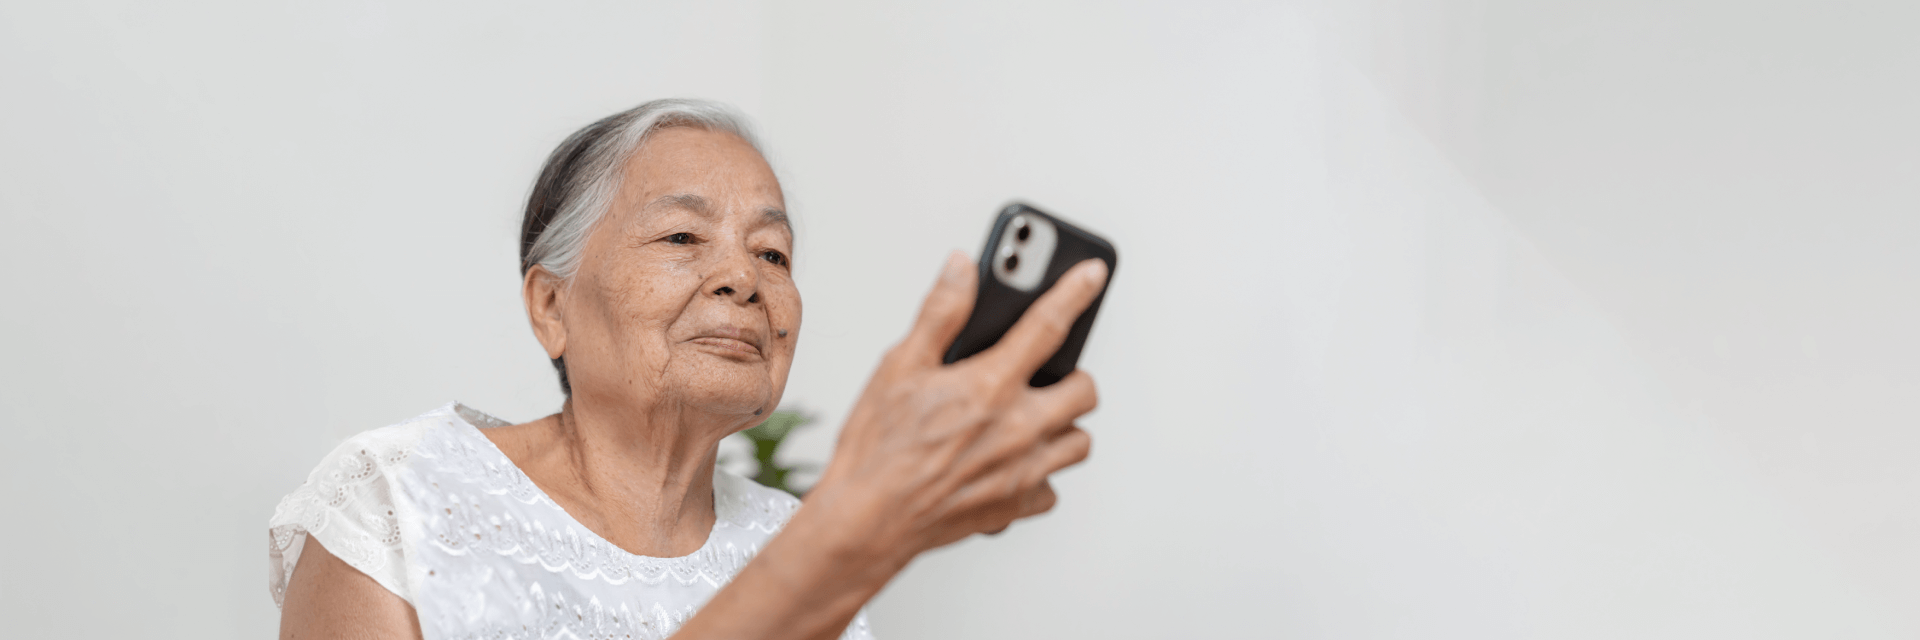 elderly-care-smartphone-binah-ai